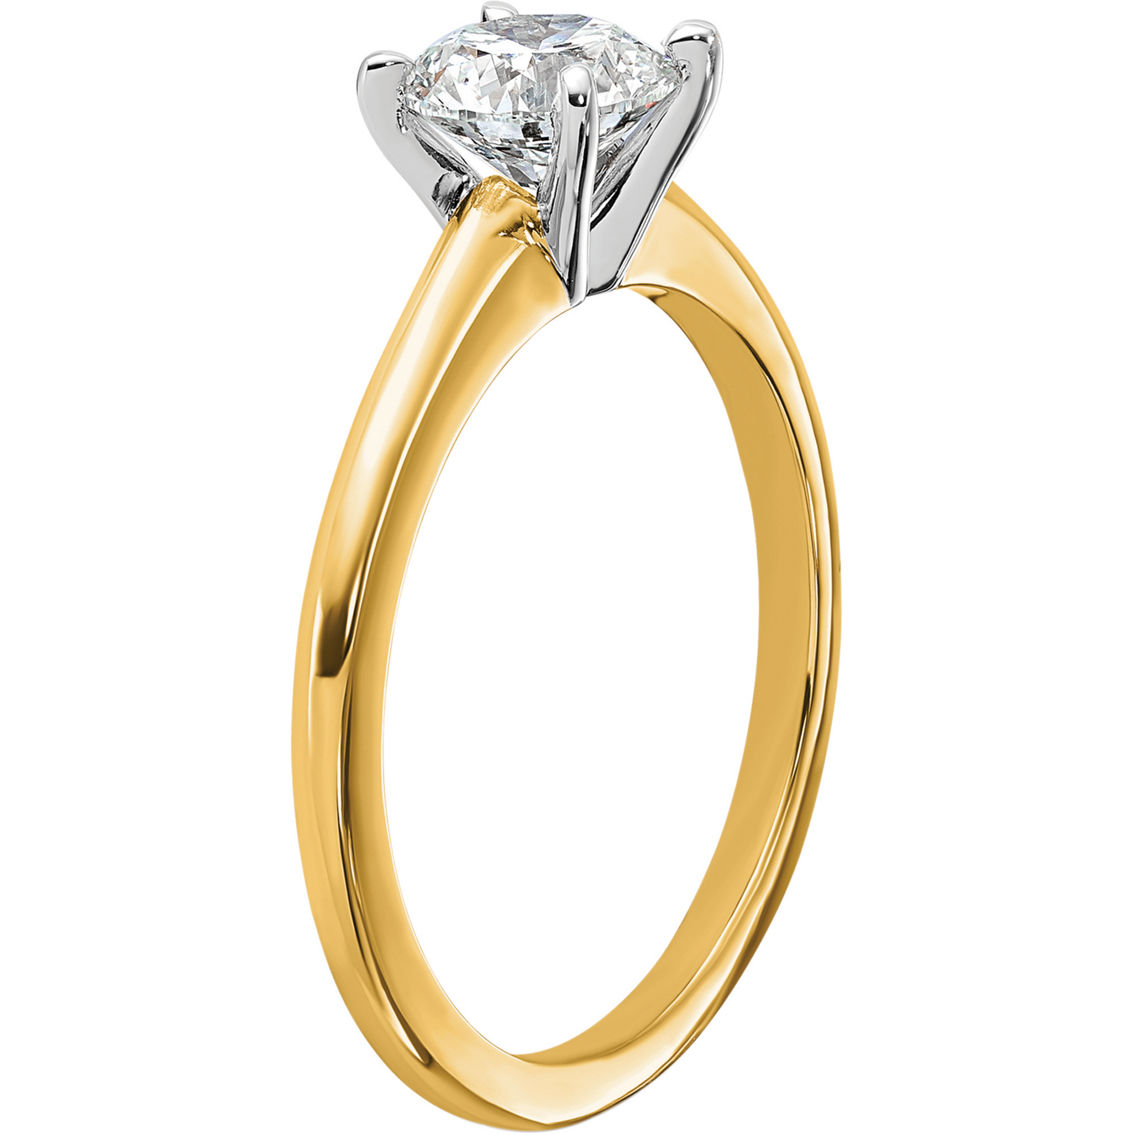 True Origin 14K Gold Certified Round Lab Grown 1 ct. Diamond Solitaire Ring - Image 3 of 4